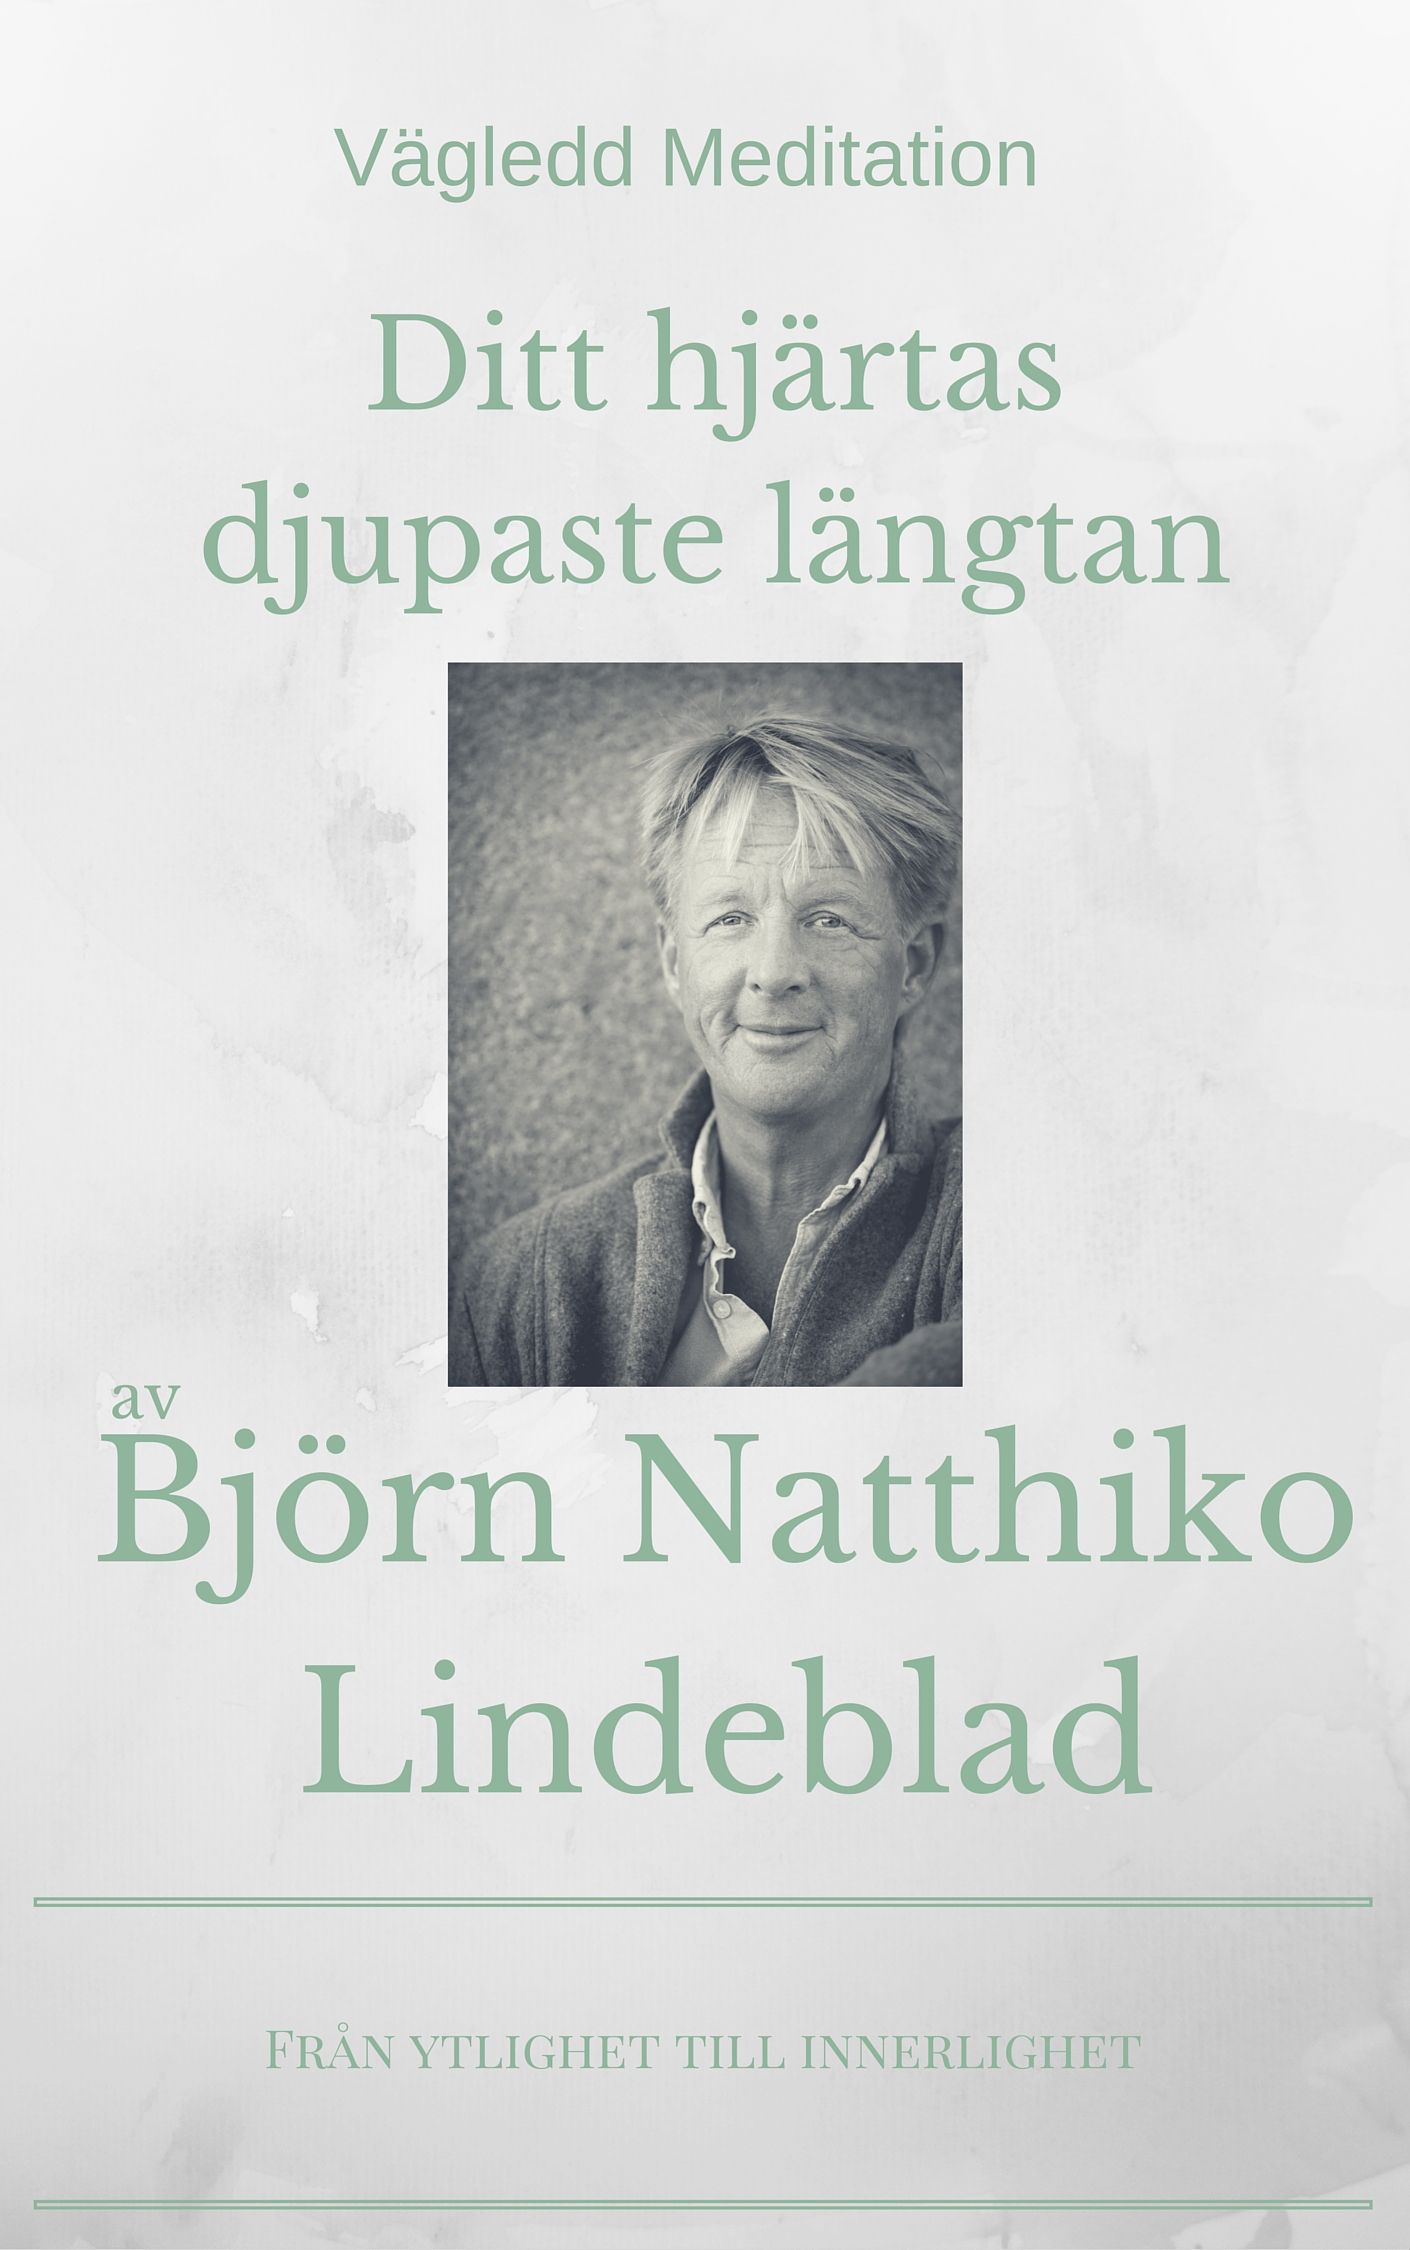 Ditt hjärtas djupaste längtan, audiobook by Björn Natthiko Lindeblad